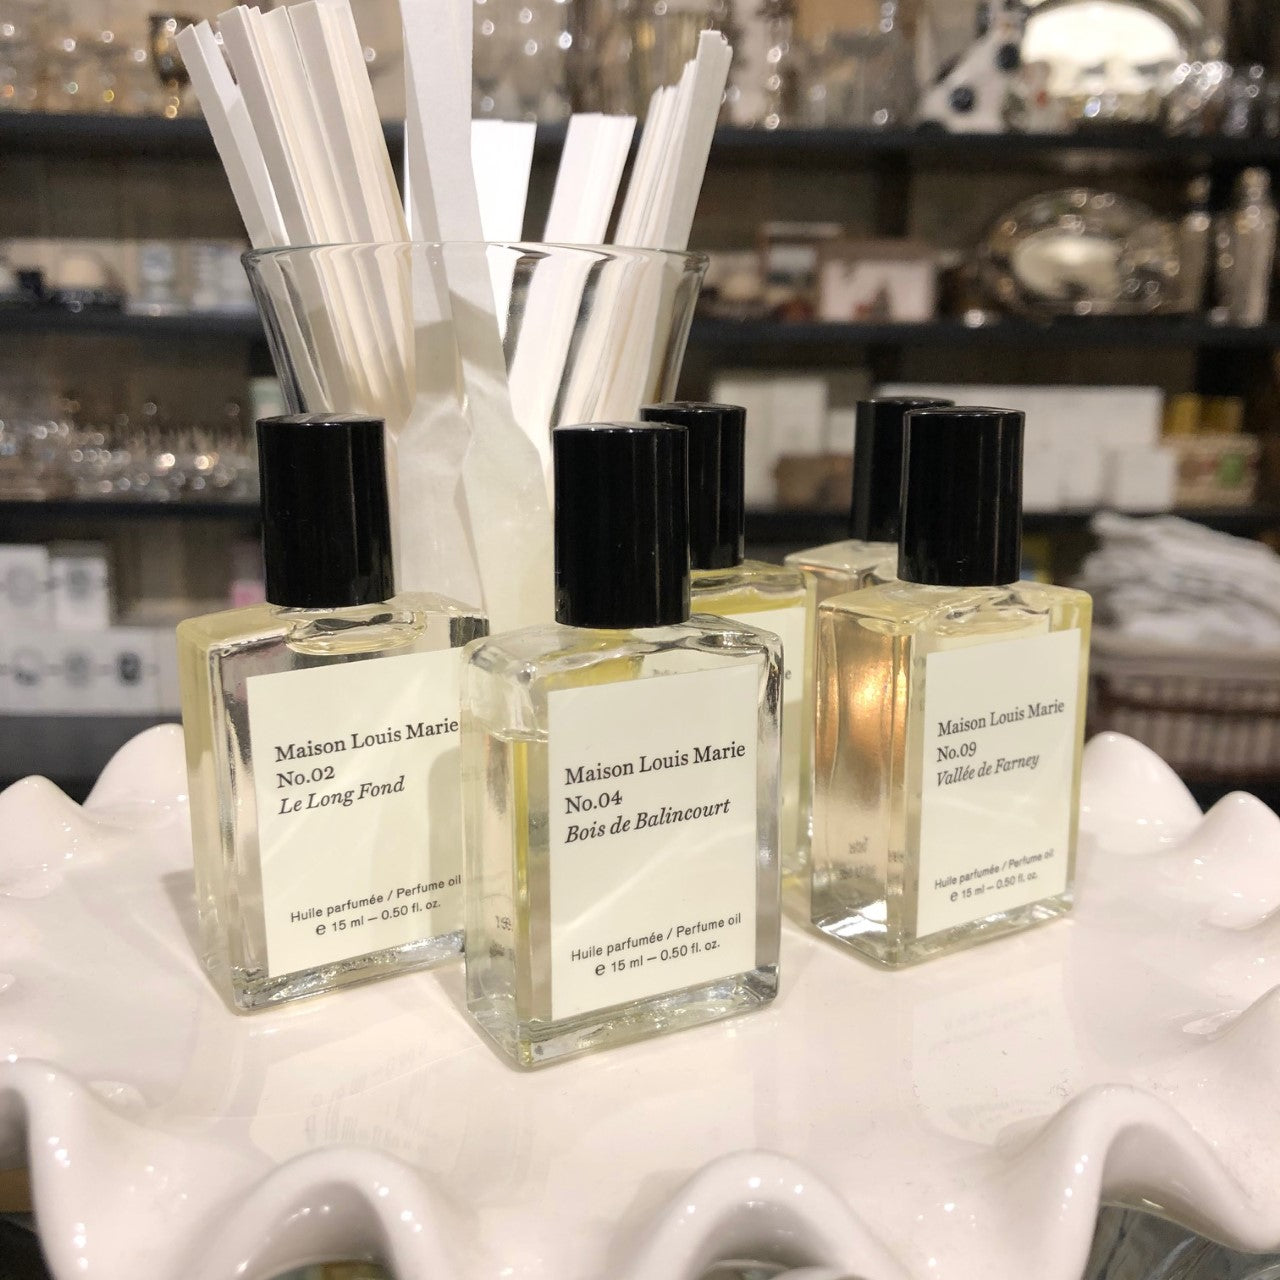 No. 04 Bois de Balincourt Perfume Oil – Watson Kennedy